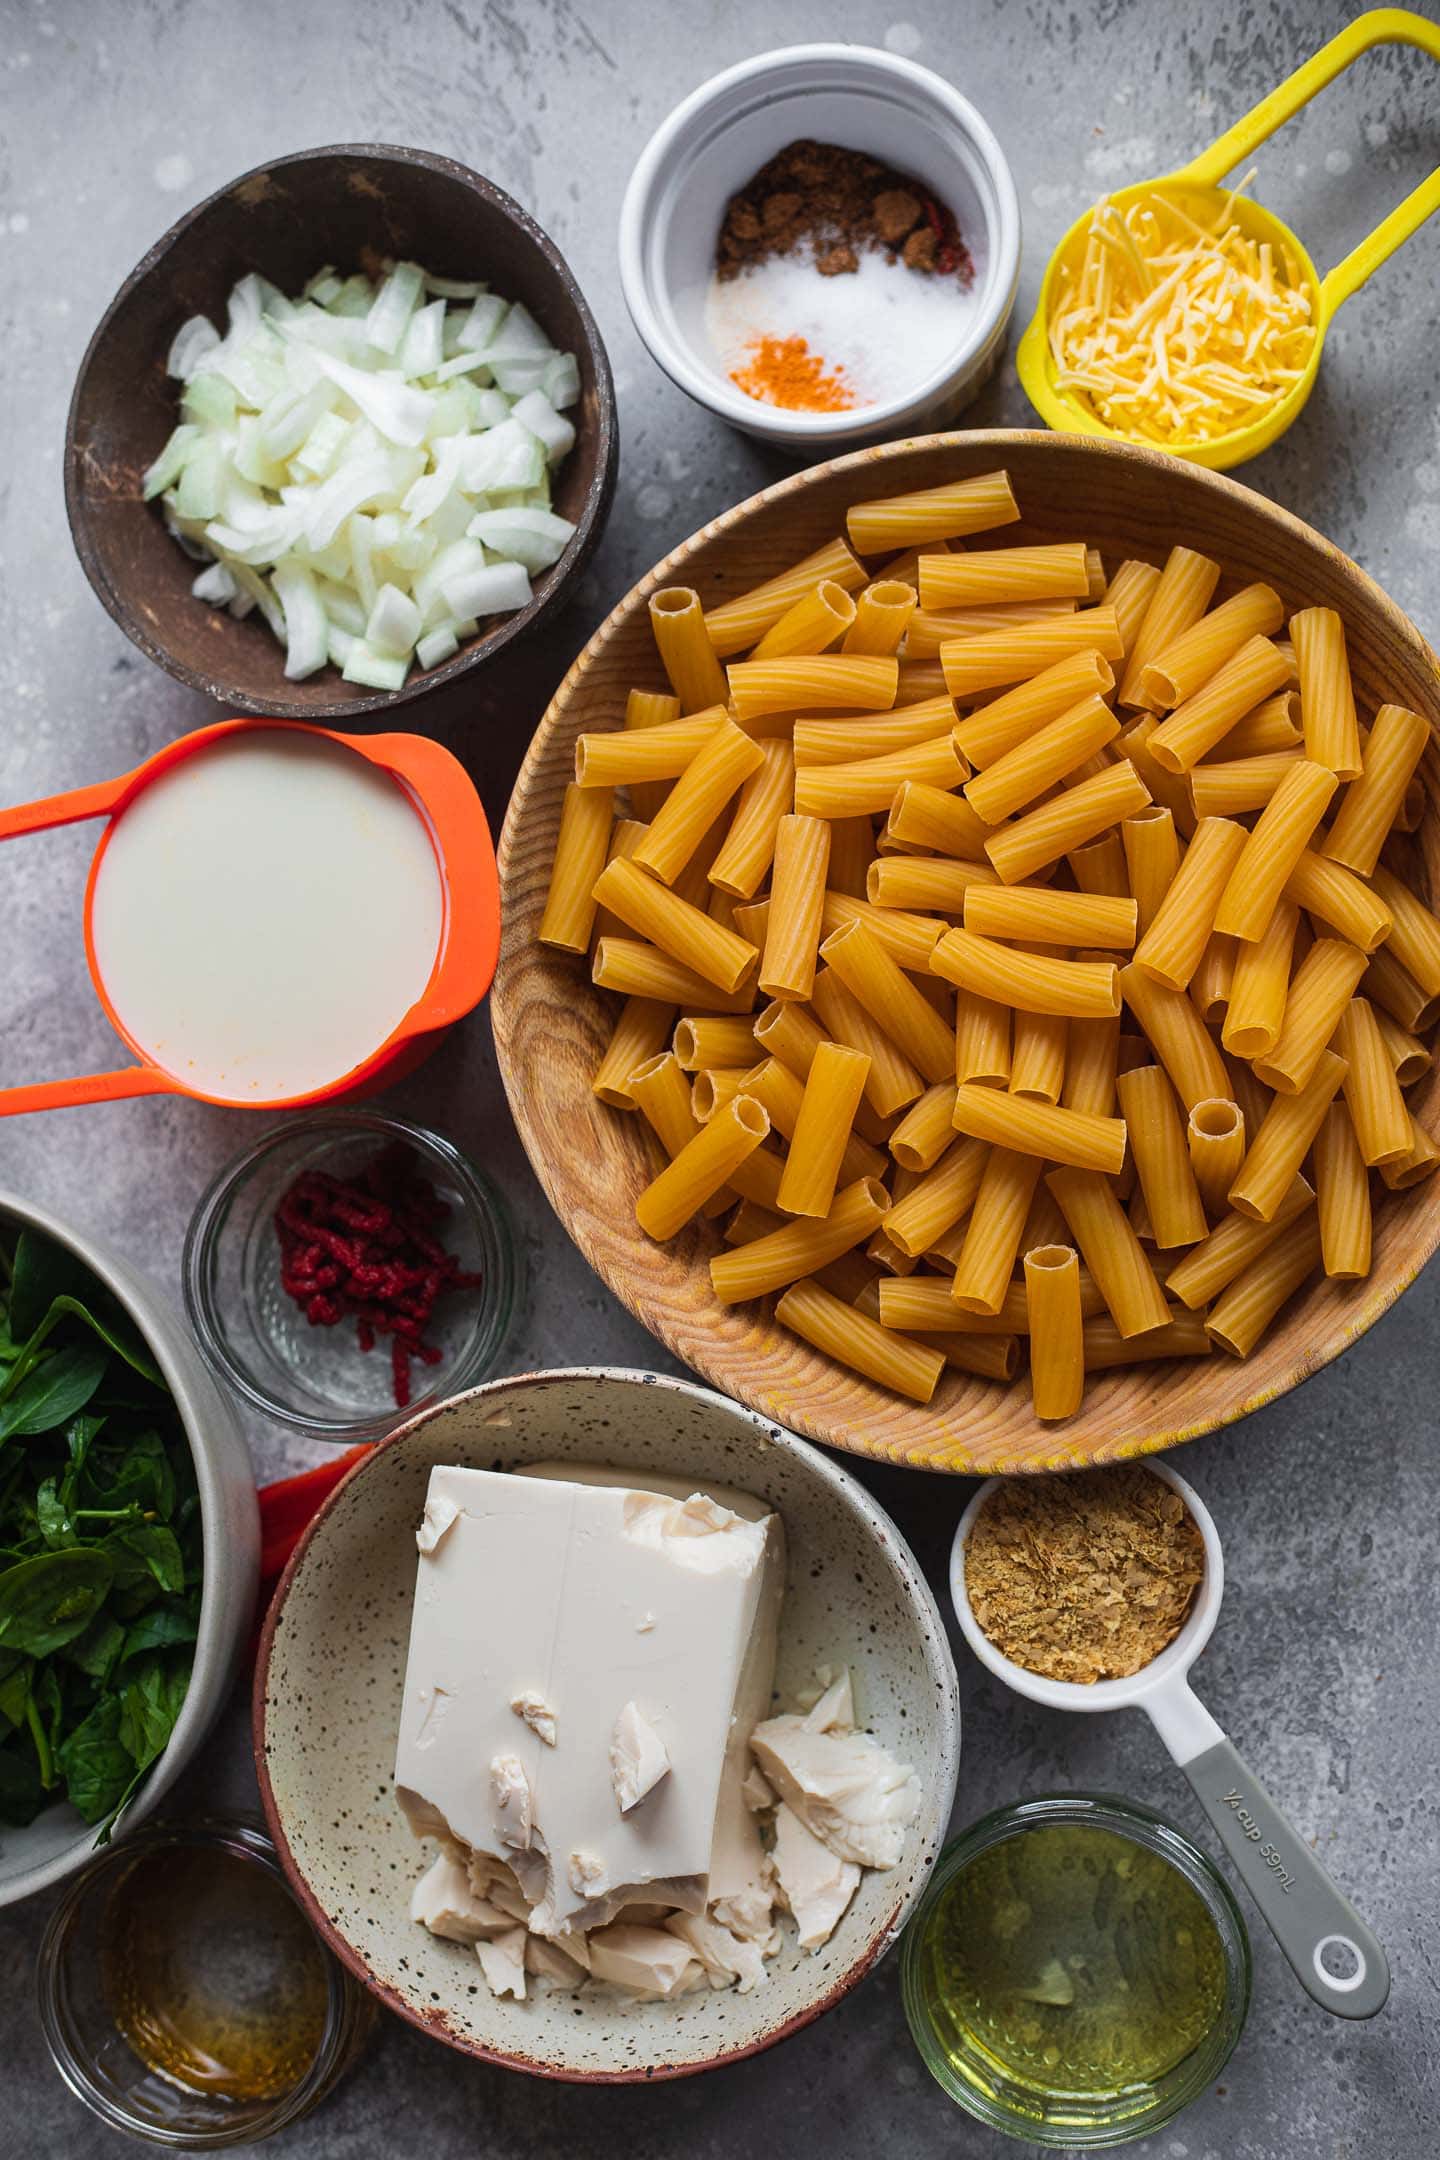 Ingredients for butternut squash pasta